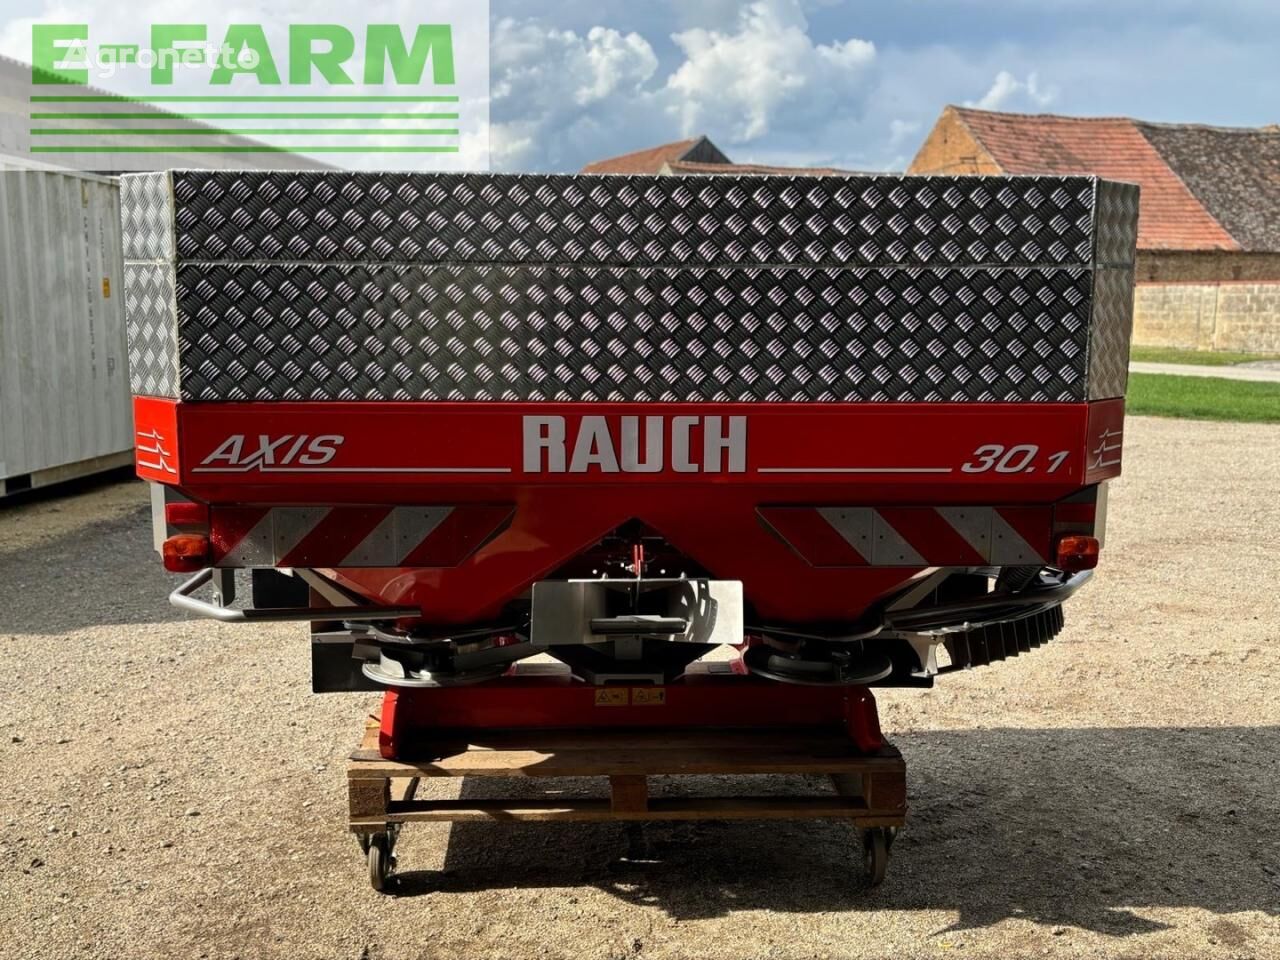 Rauch Axis 30.1 mounted fertilizer spreader